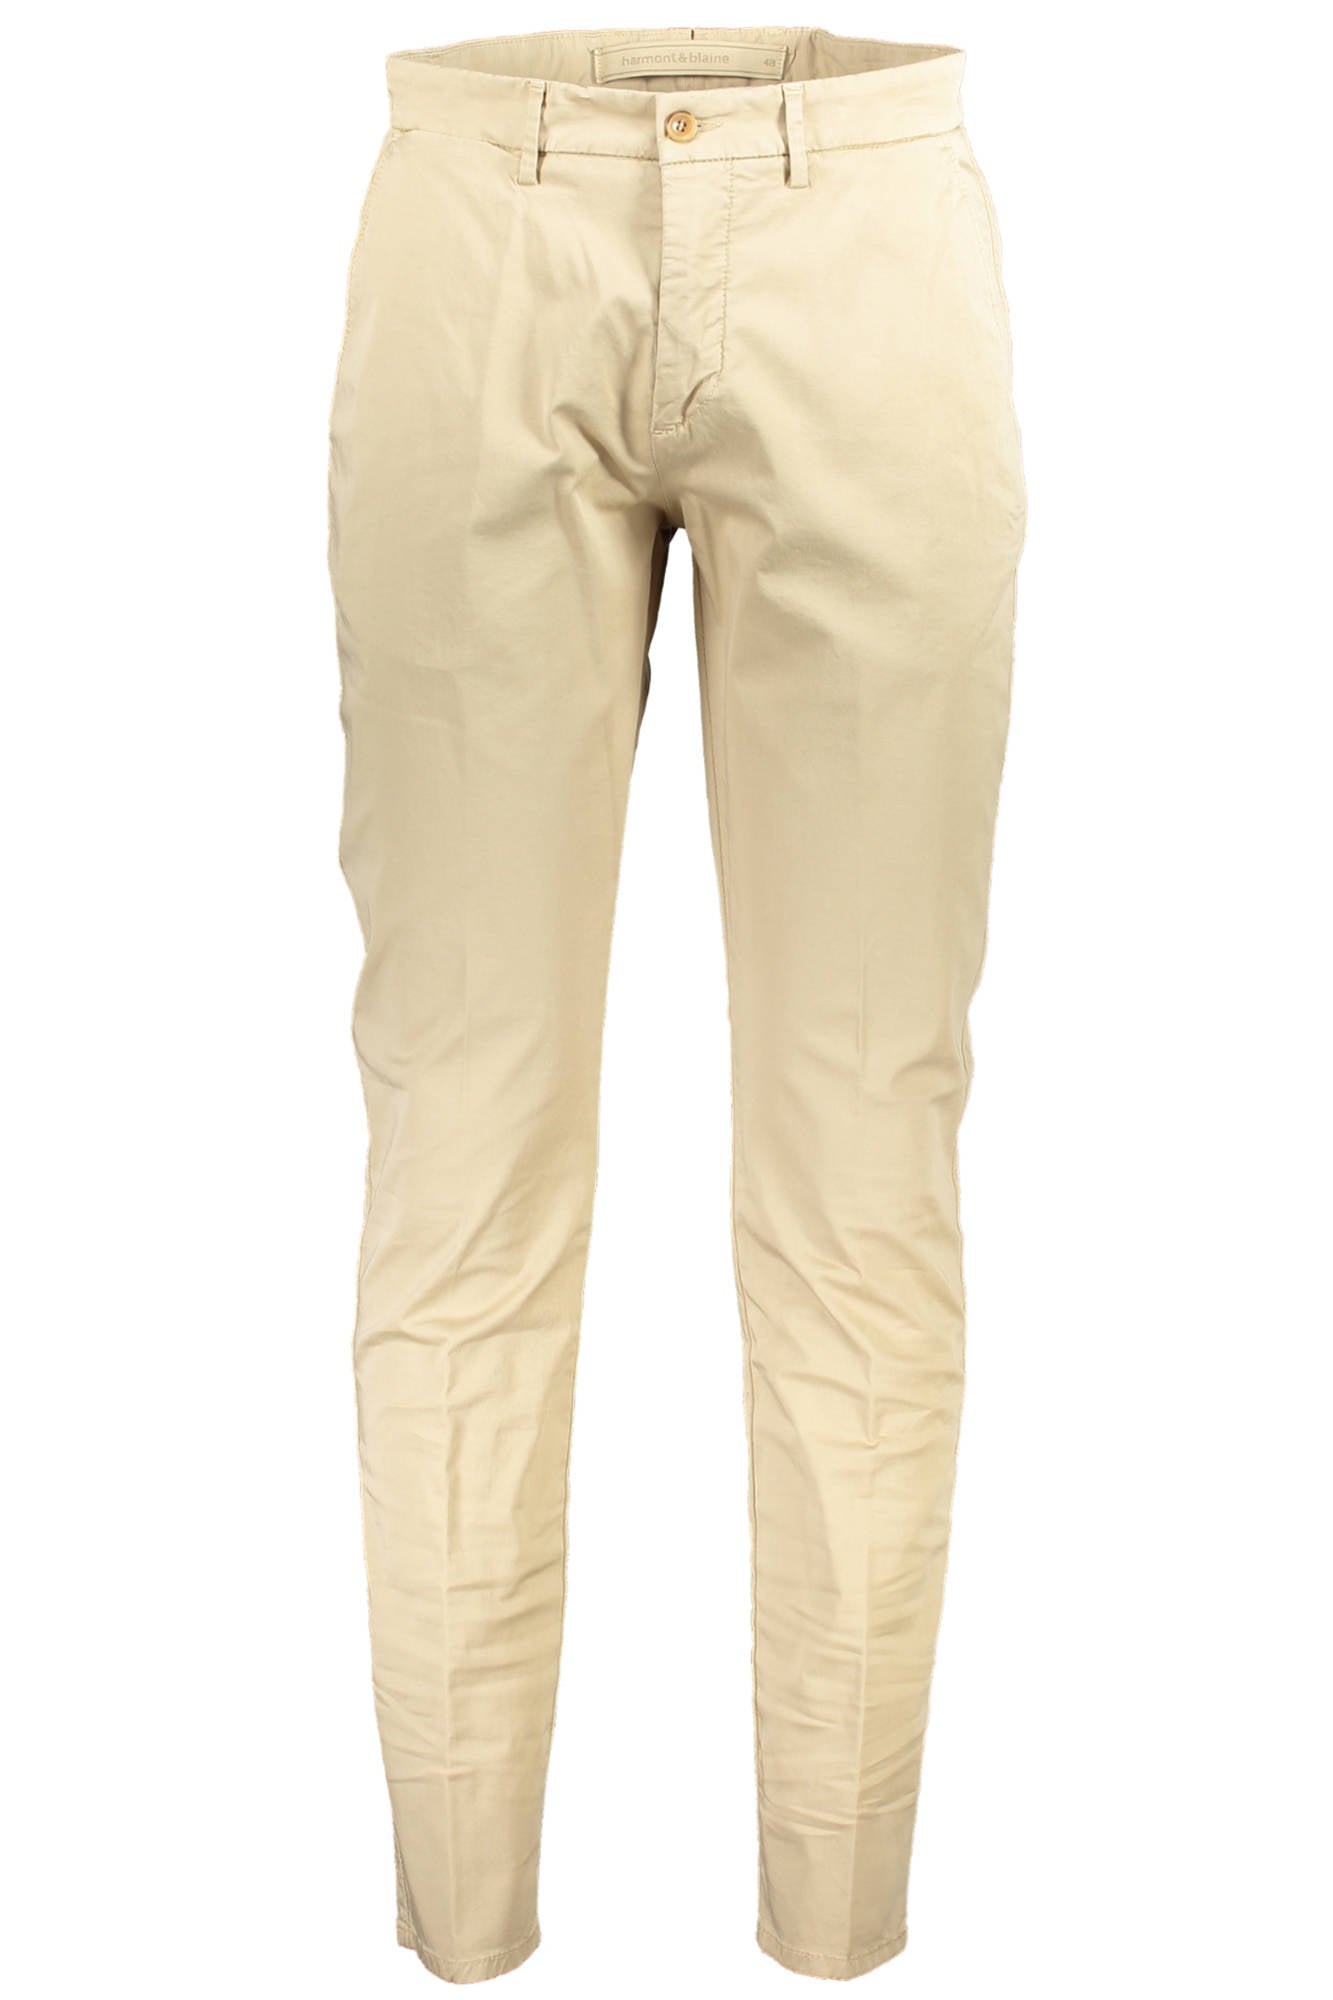 Harmont  Blaine  Brown Formal Trousers for Men Online  Trip Attires   TripAttirescom